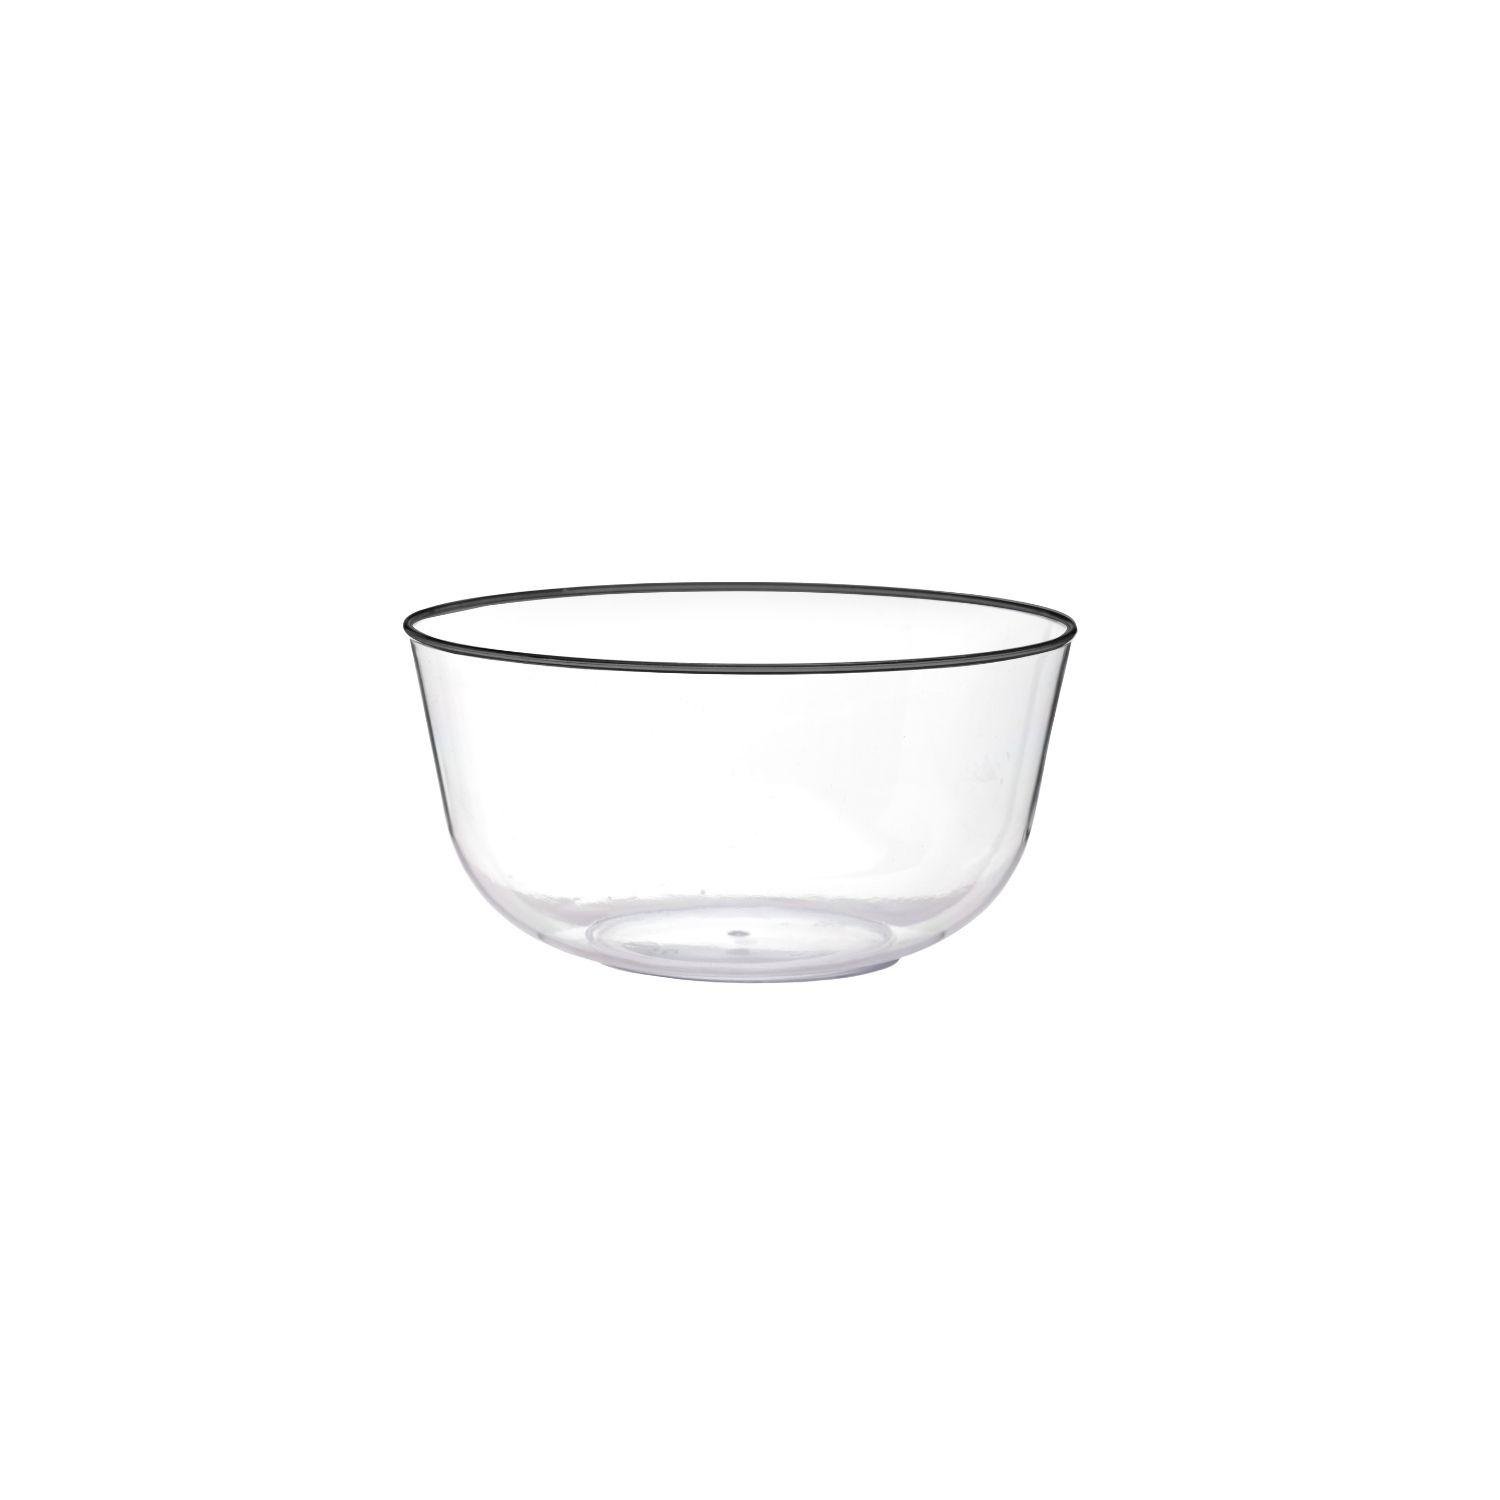 Classic Clear Design Plastic Bowls - Black Rim 10 Ct.